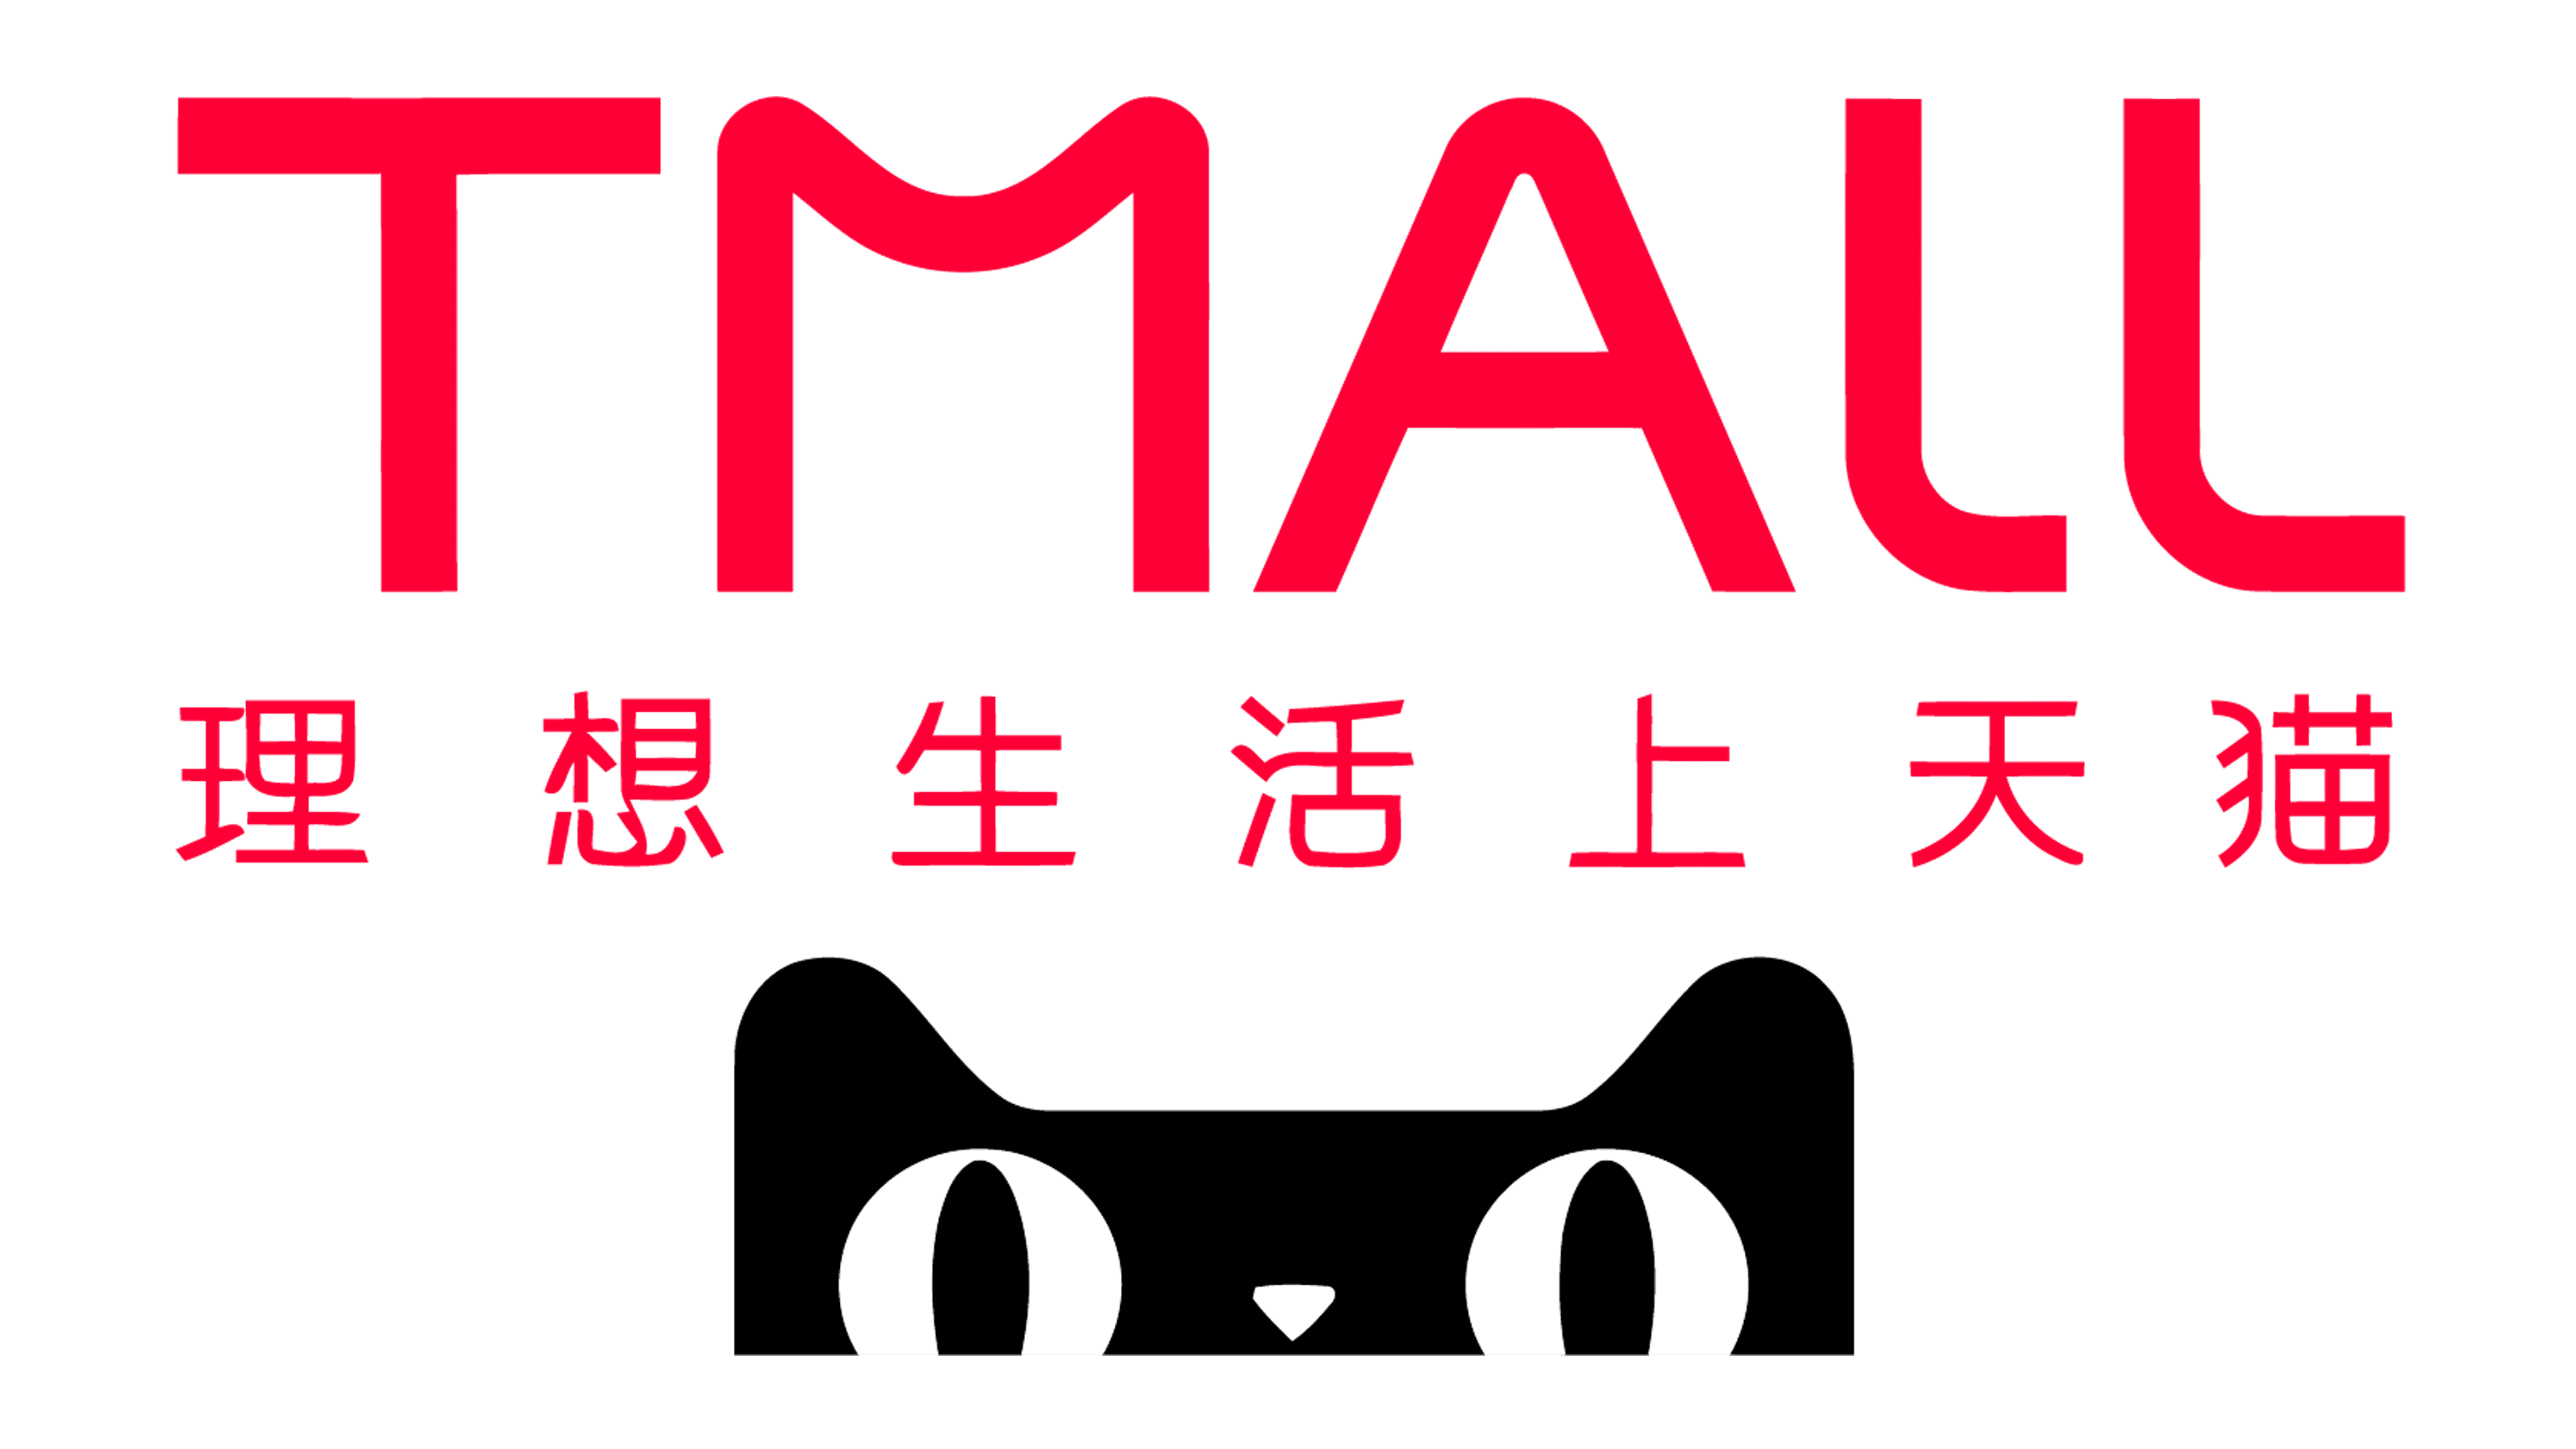 Logo Tmall